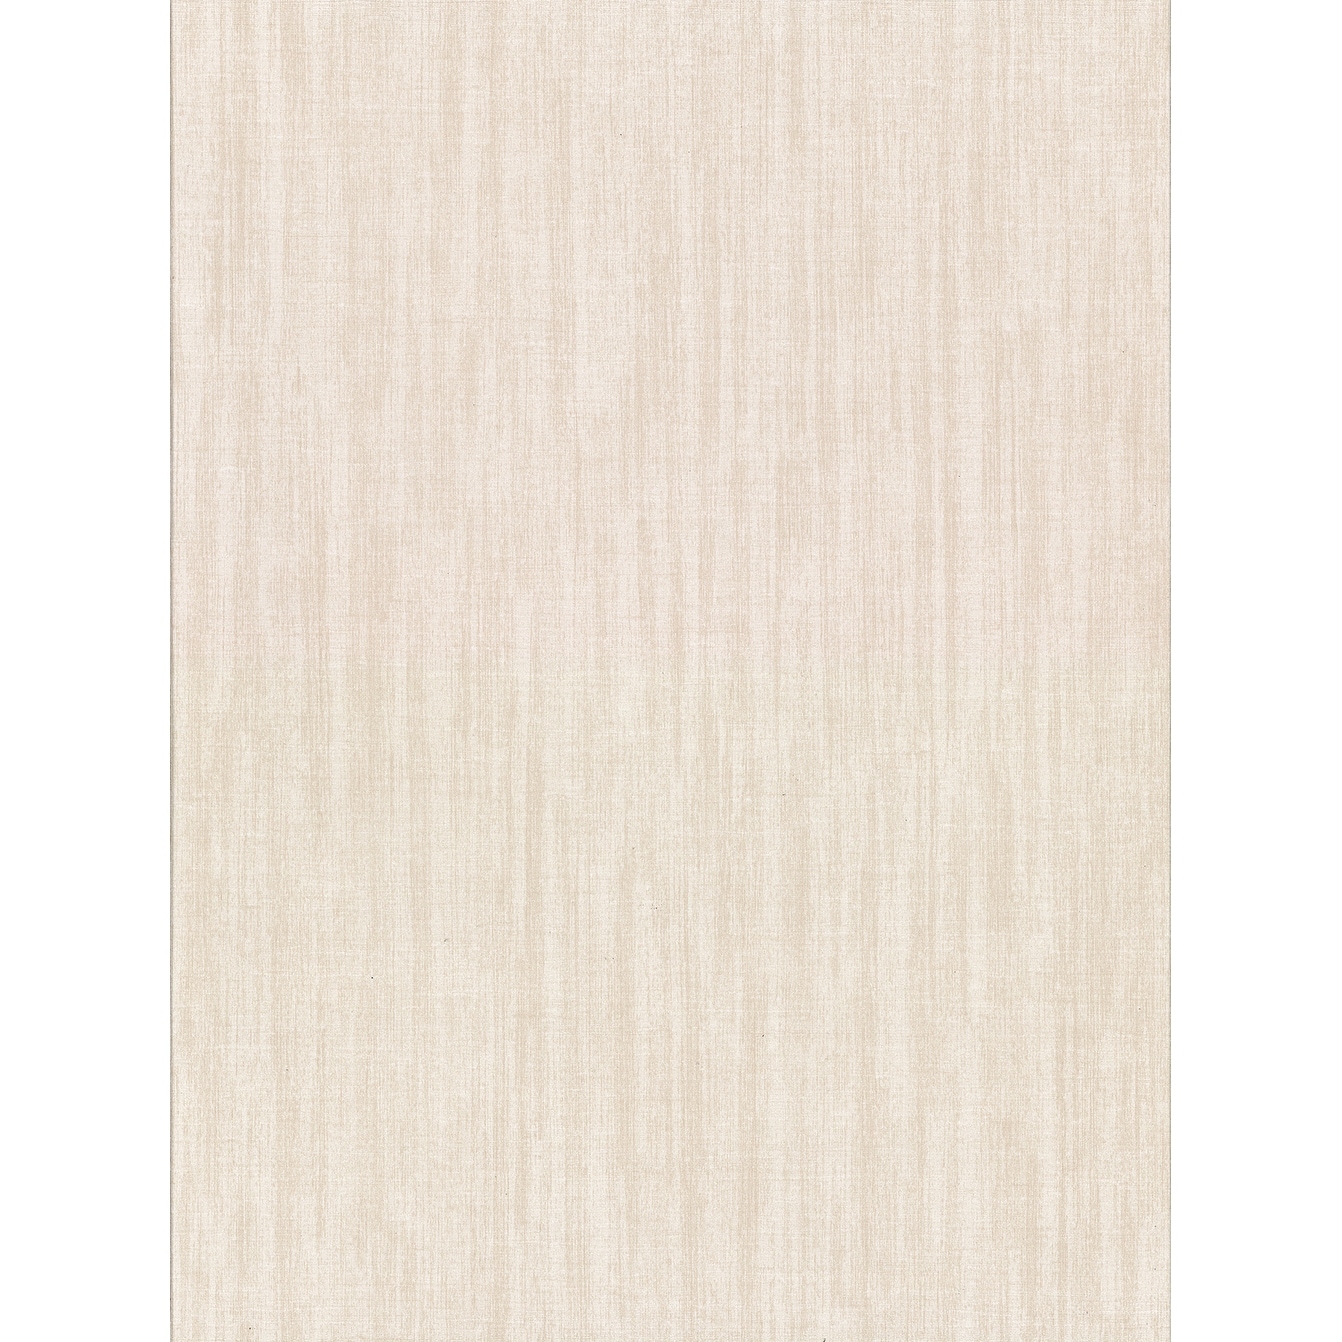 Encinitas, Brubeck Wheat Distressed Texture, 27' L X 27 W, Wallpaper Roll